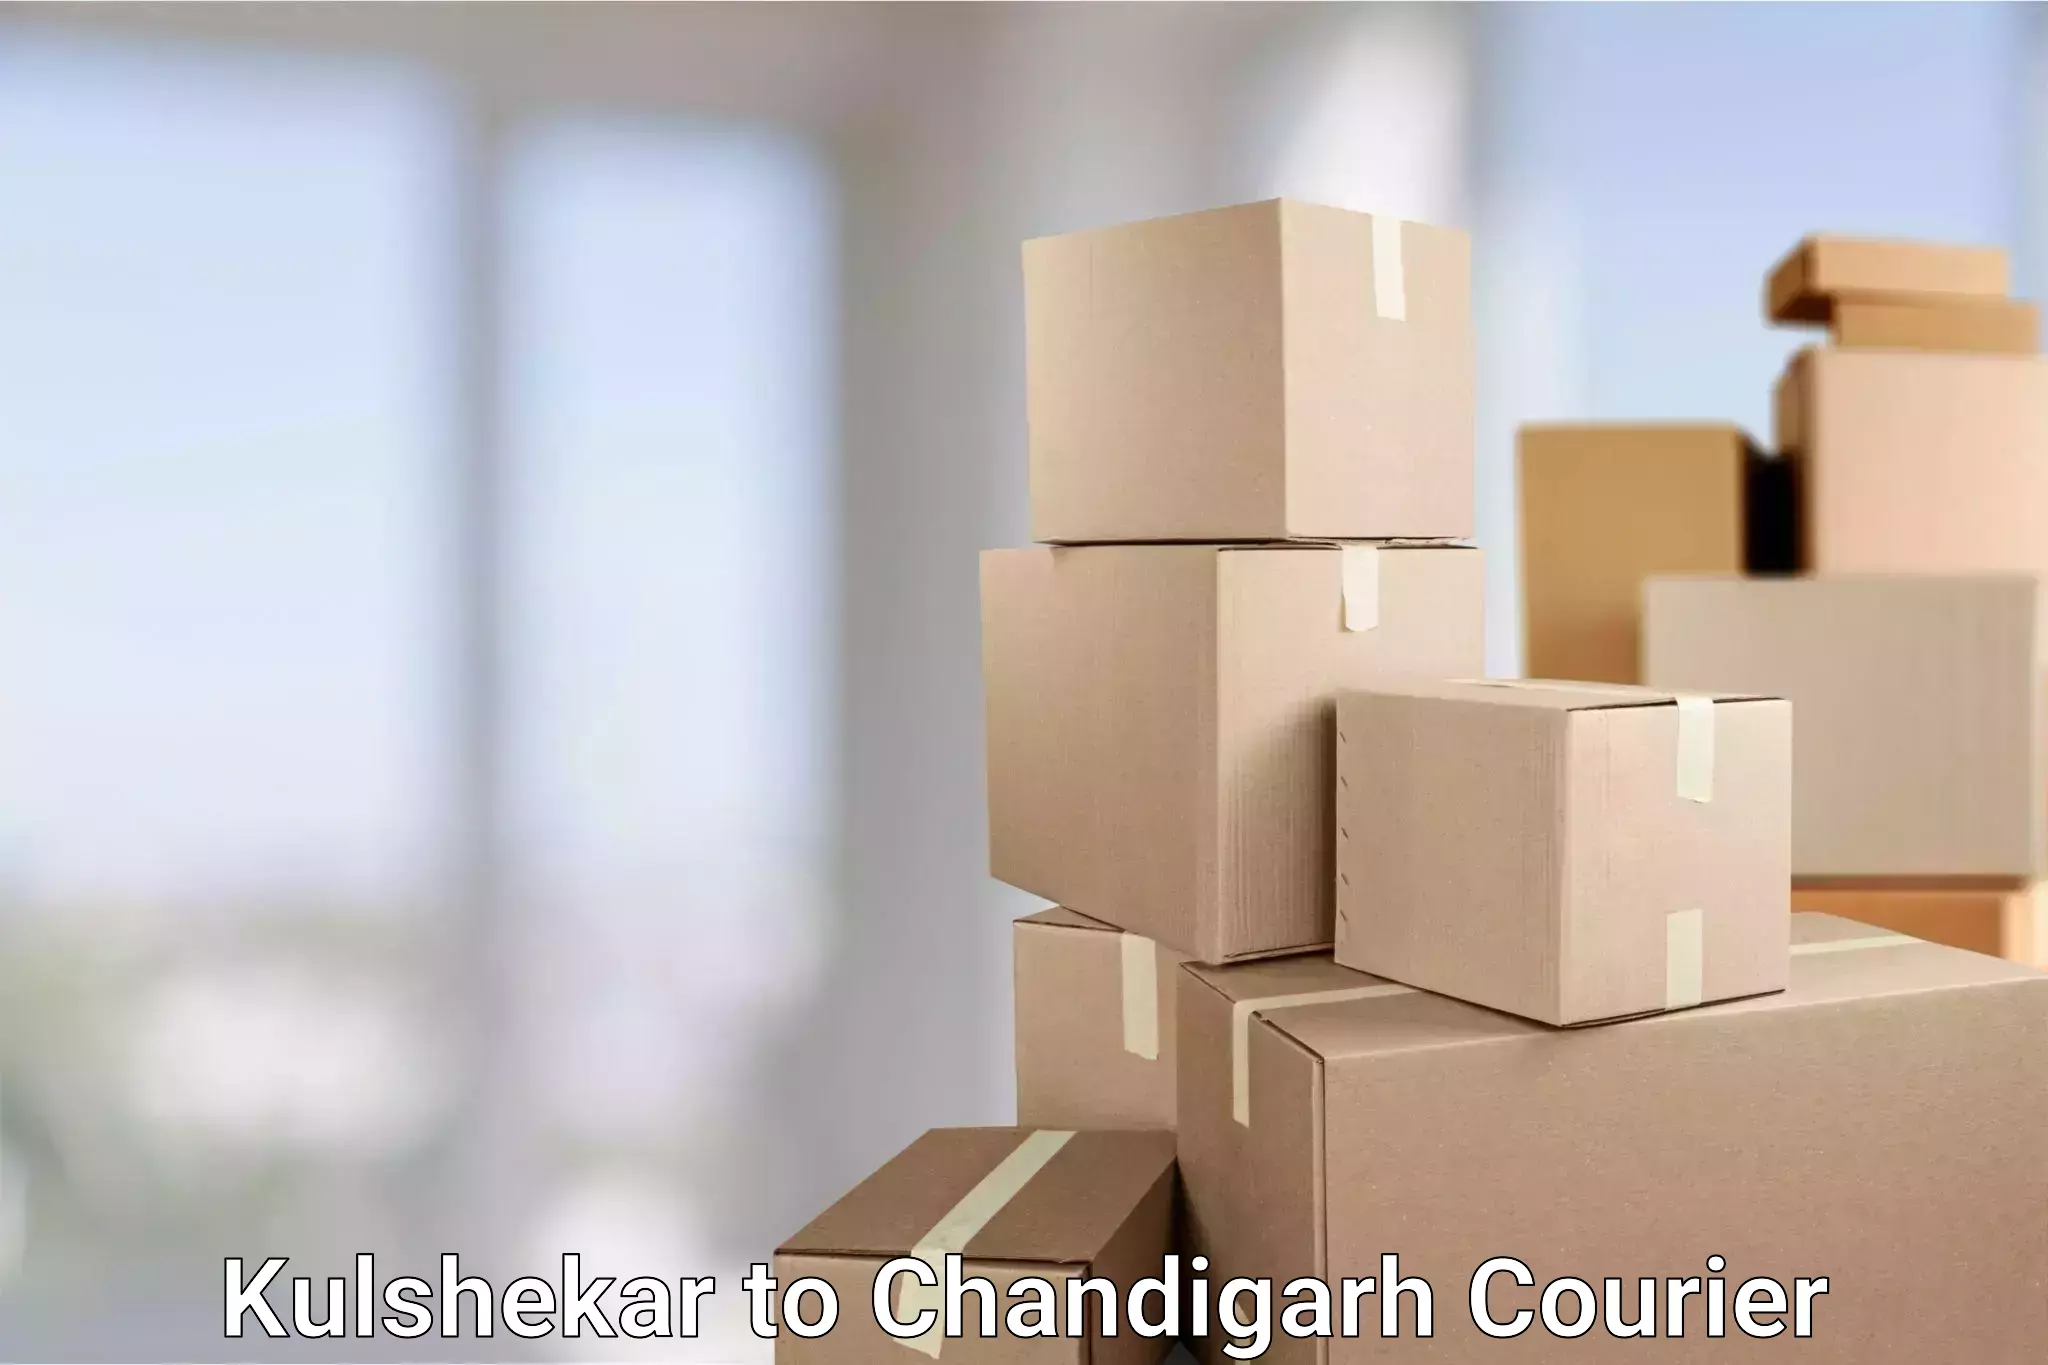 High-performance logistics Kulshekar to Chandigarh